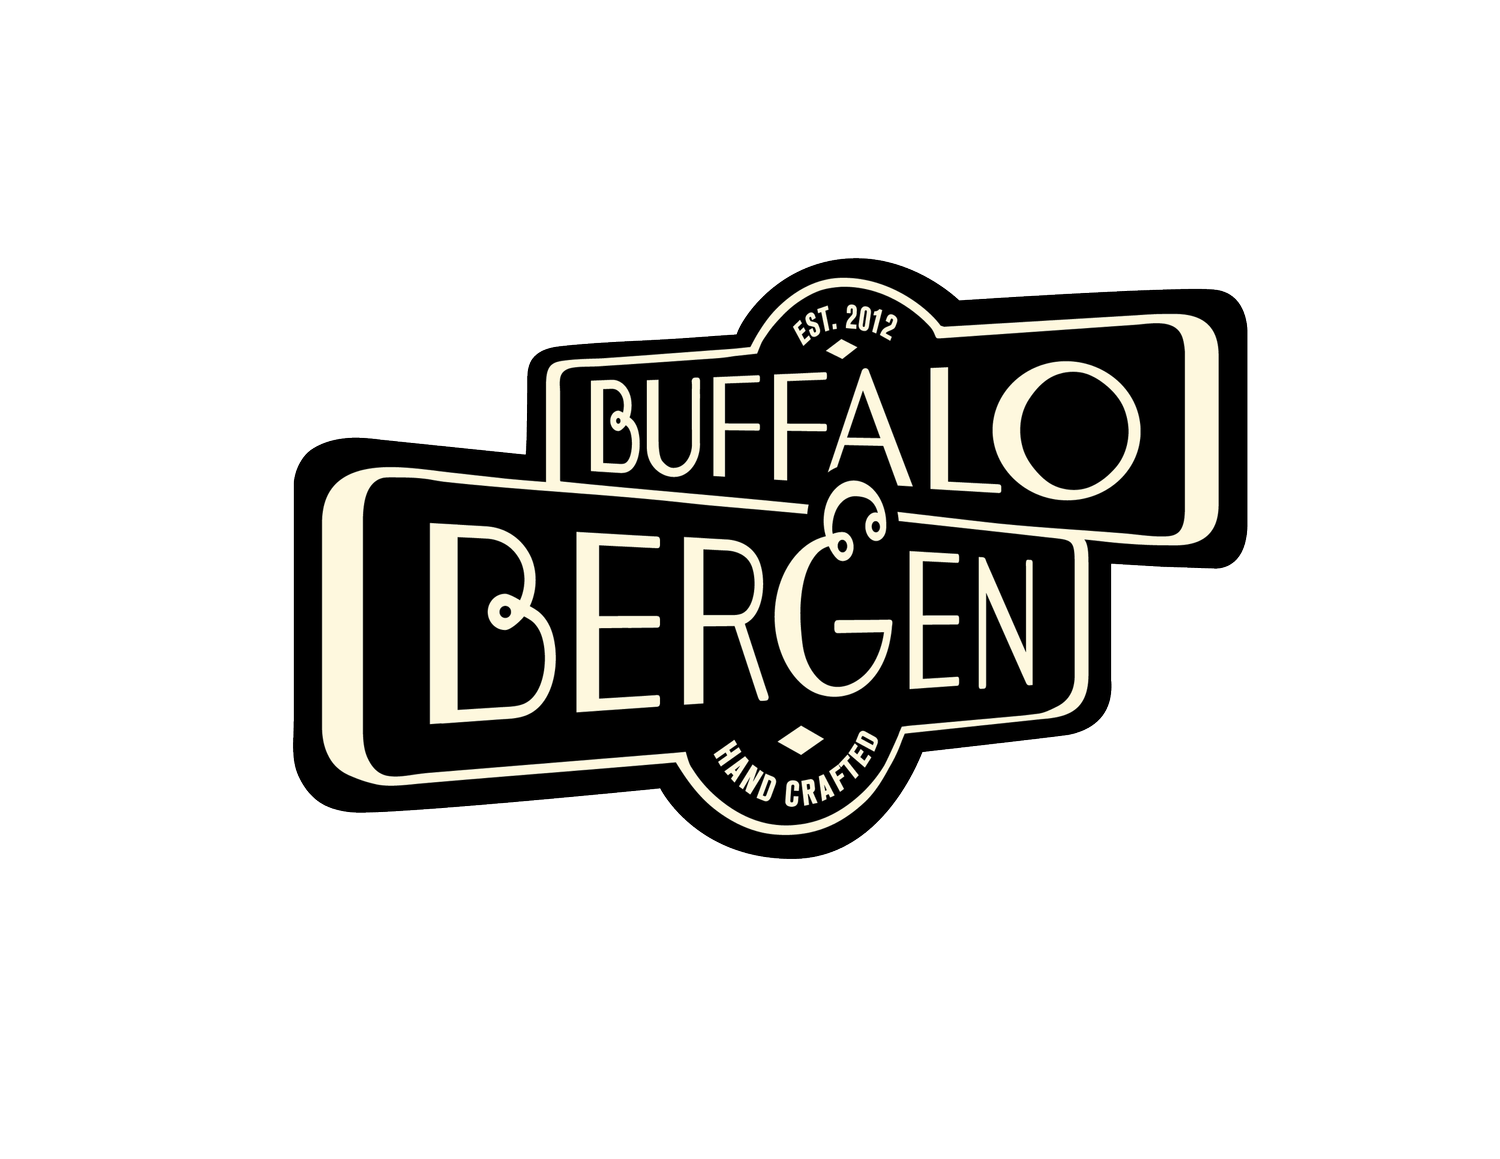 Buffalo &amp; Bergen